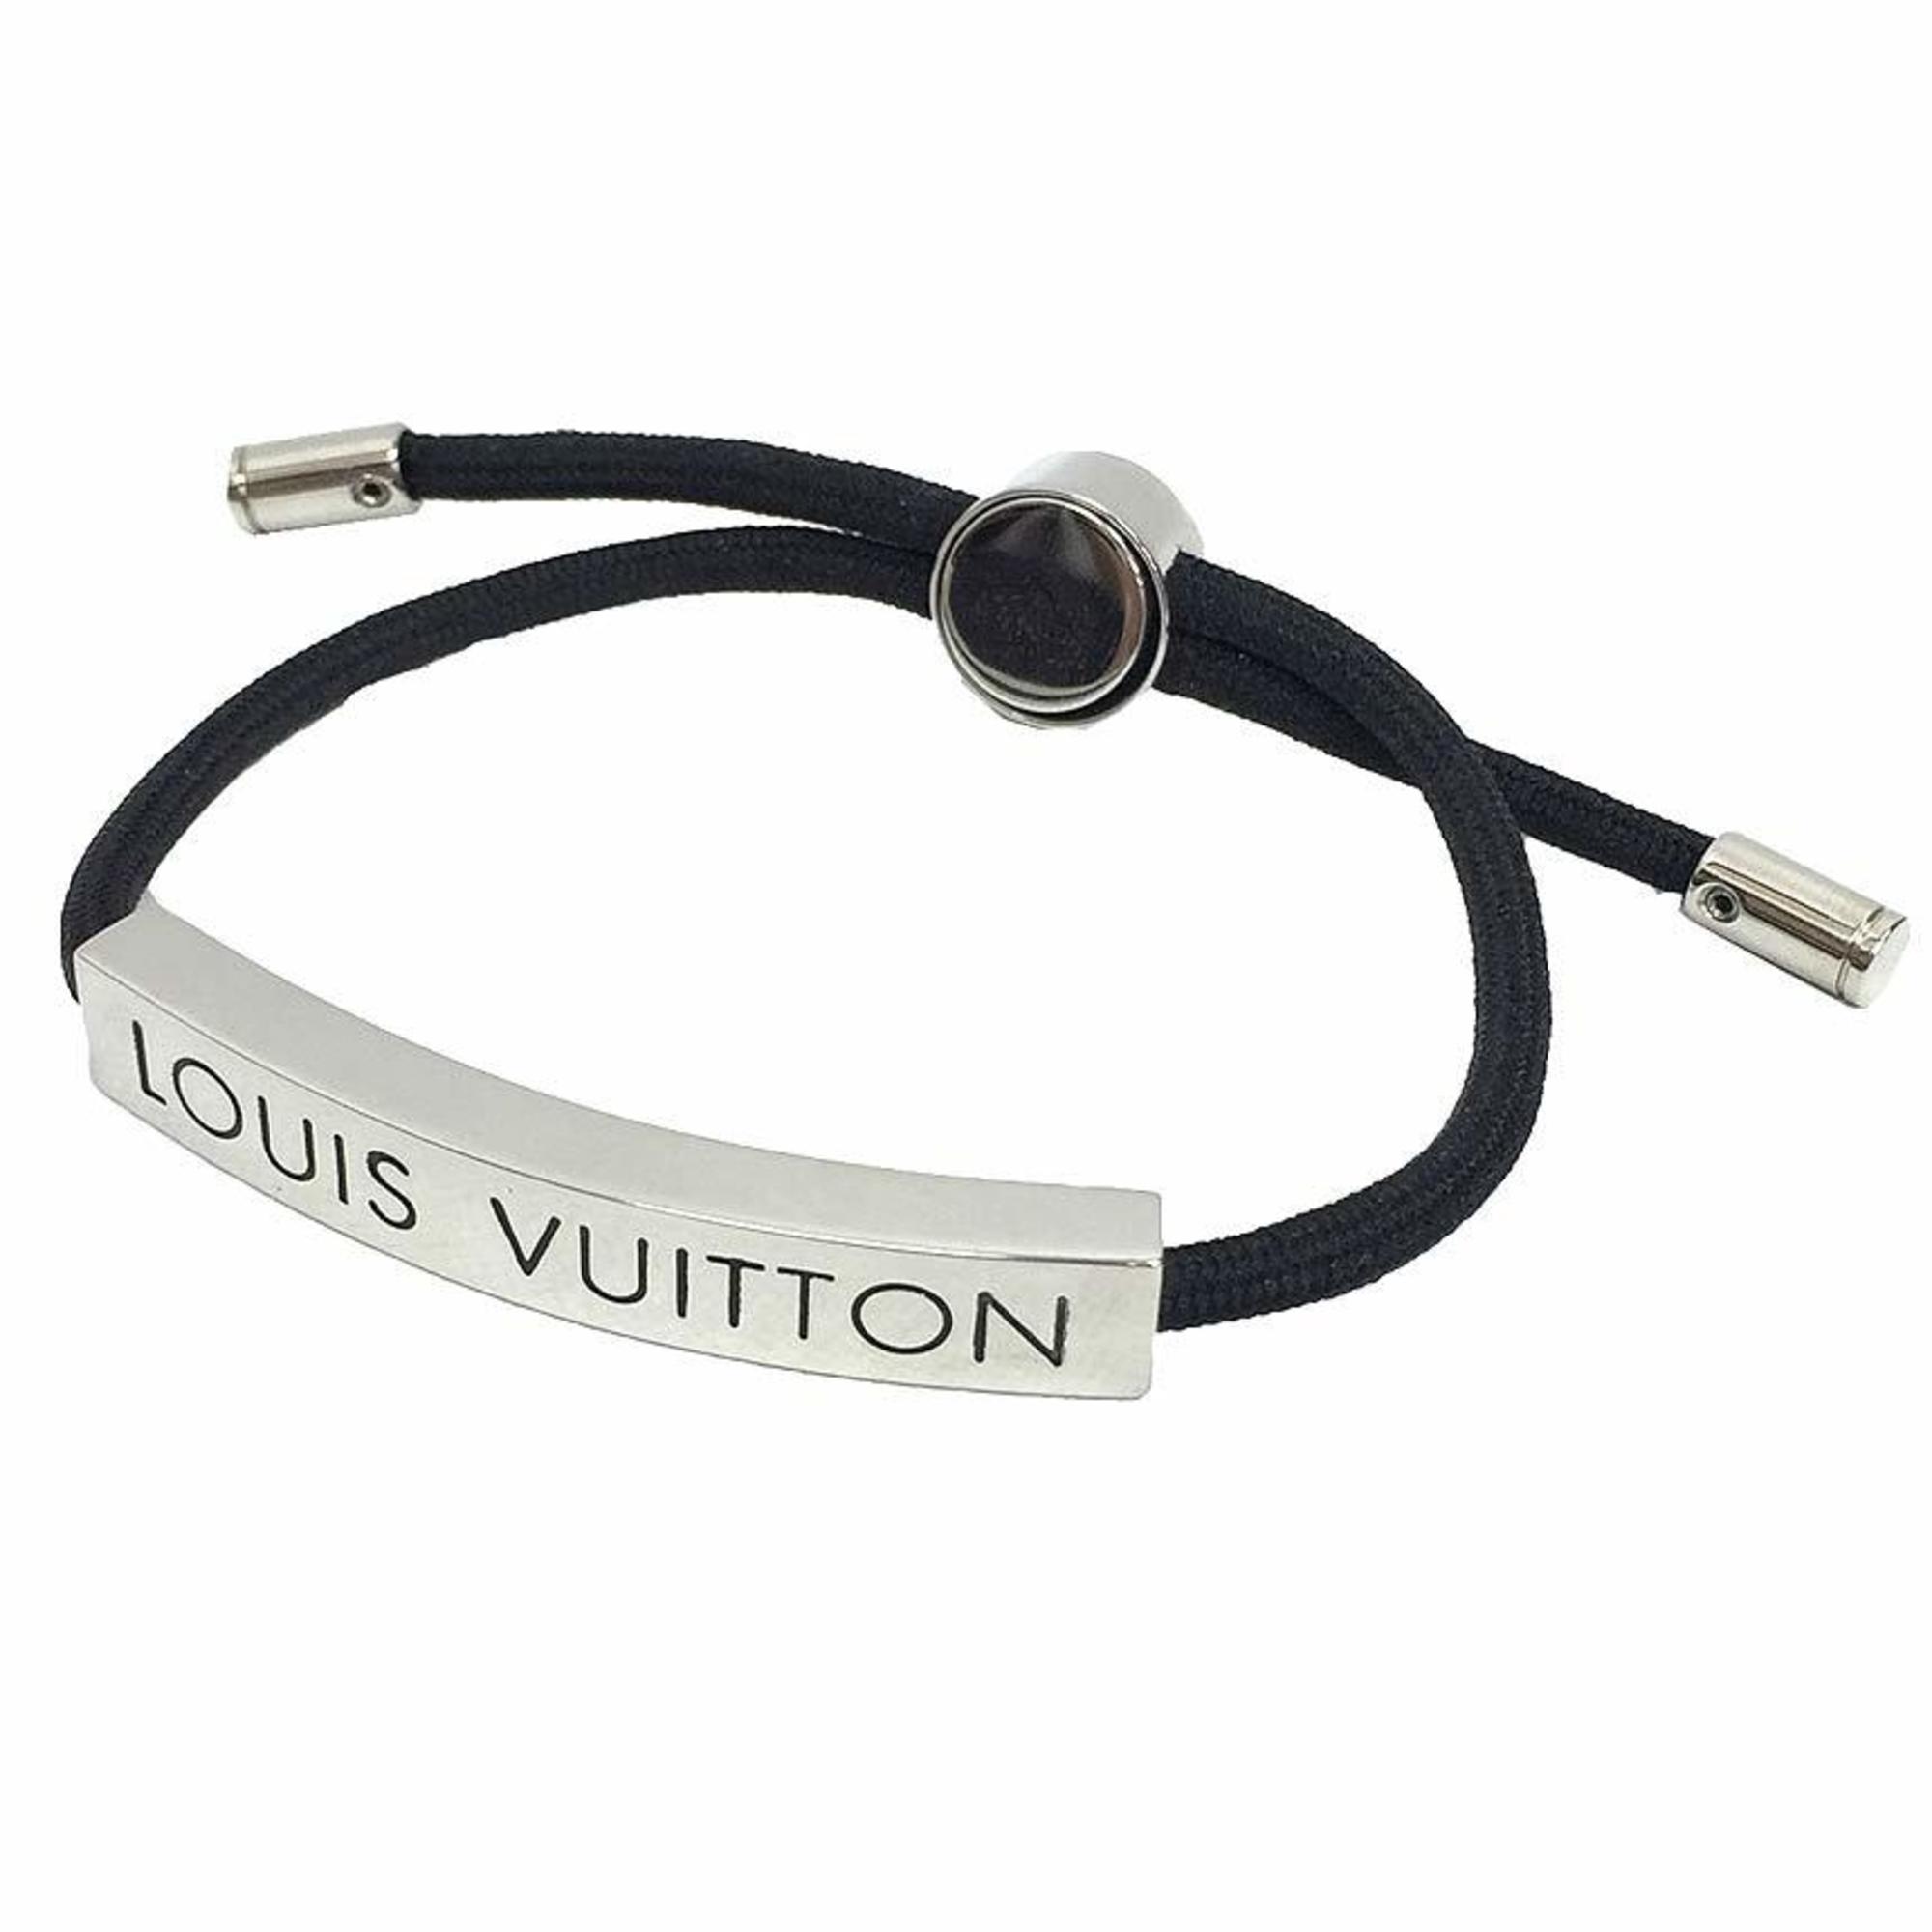 Products by Louis Vuitton: Space LV Bracelet